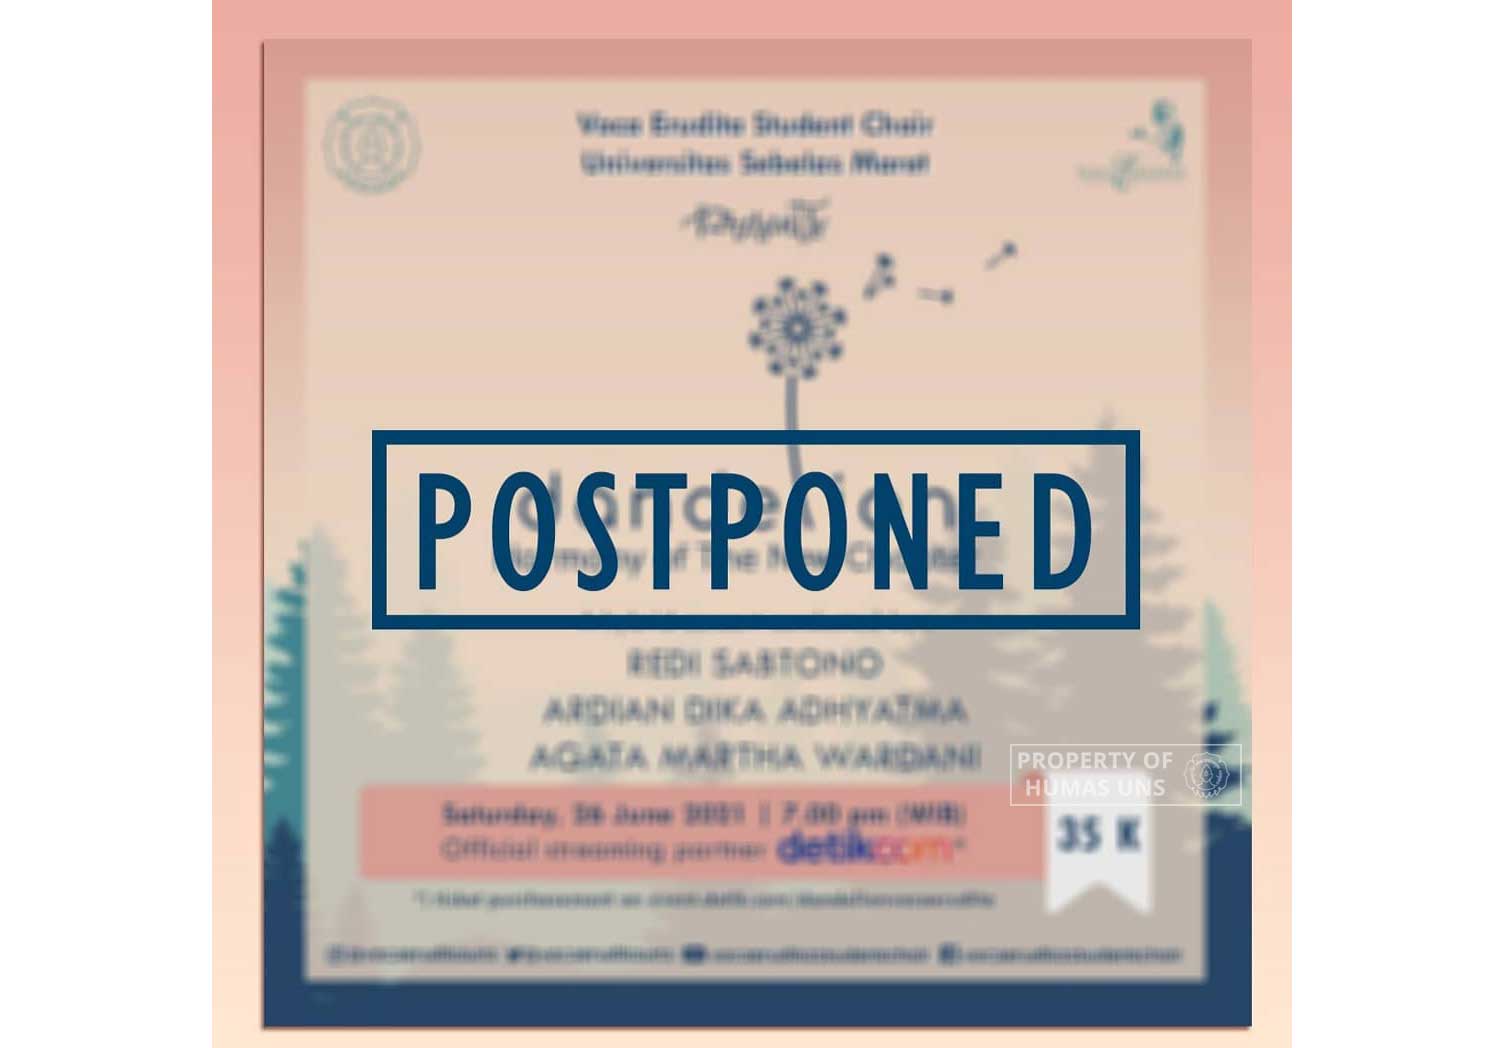 Campus Activity Limitation: Voca Erudita Dandelion Concert is Postponed